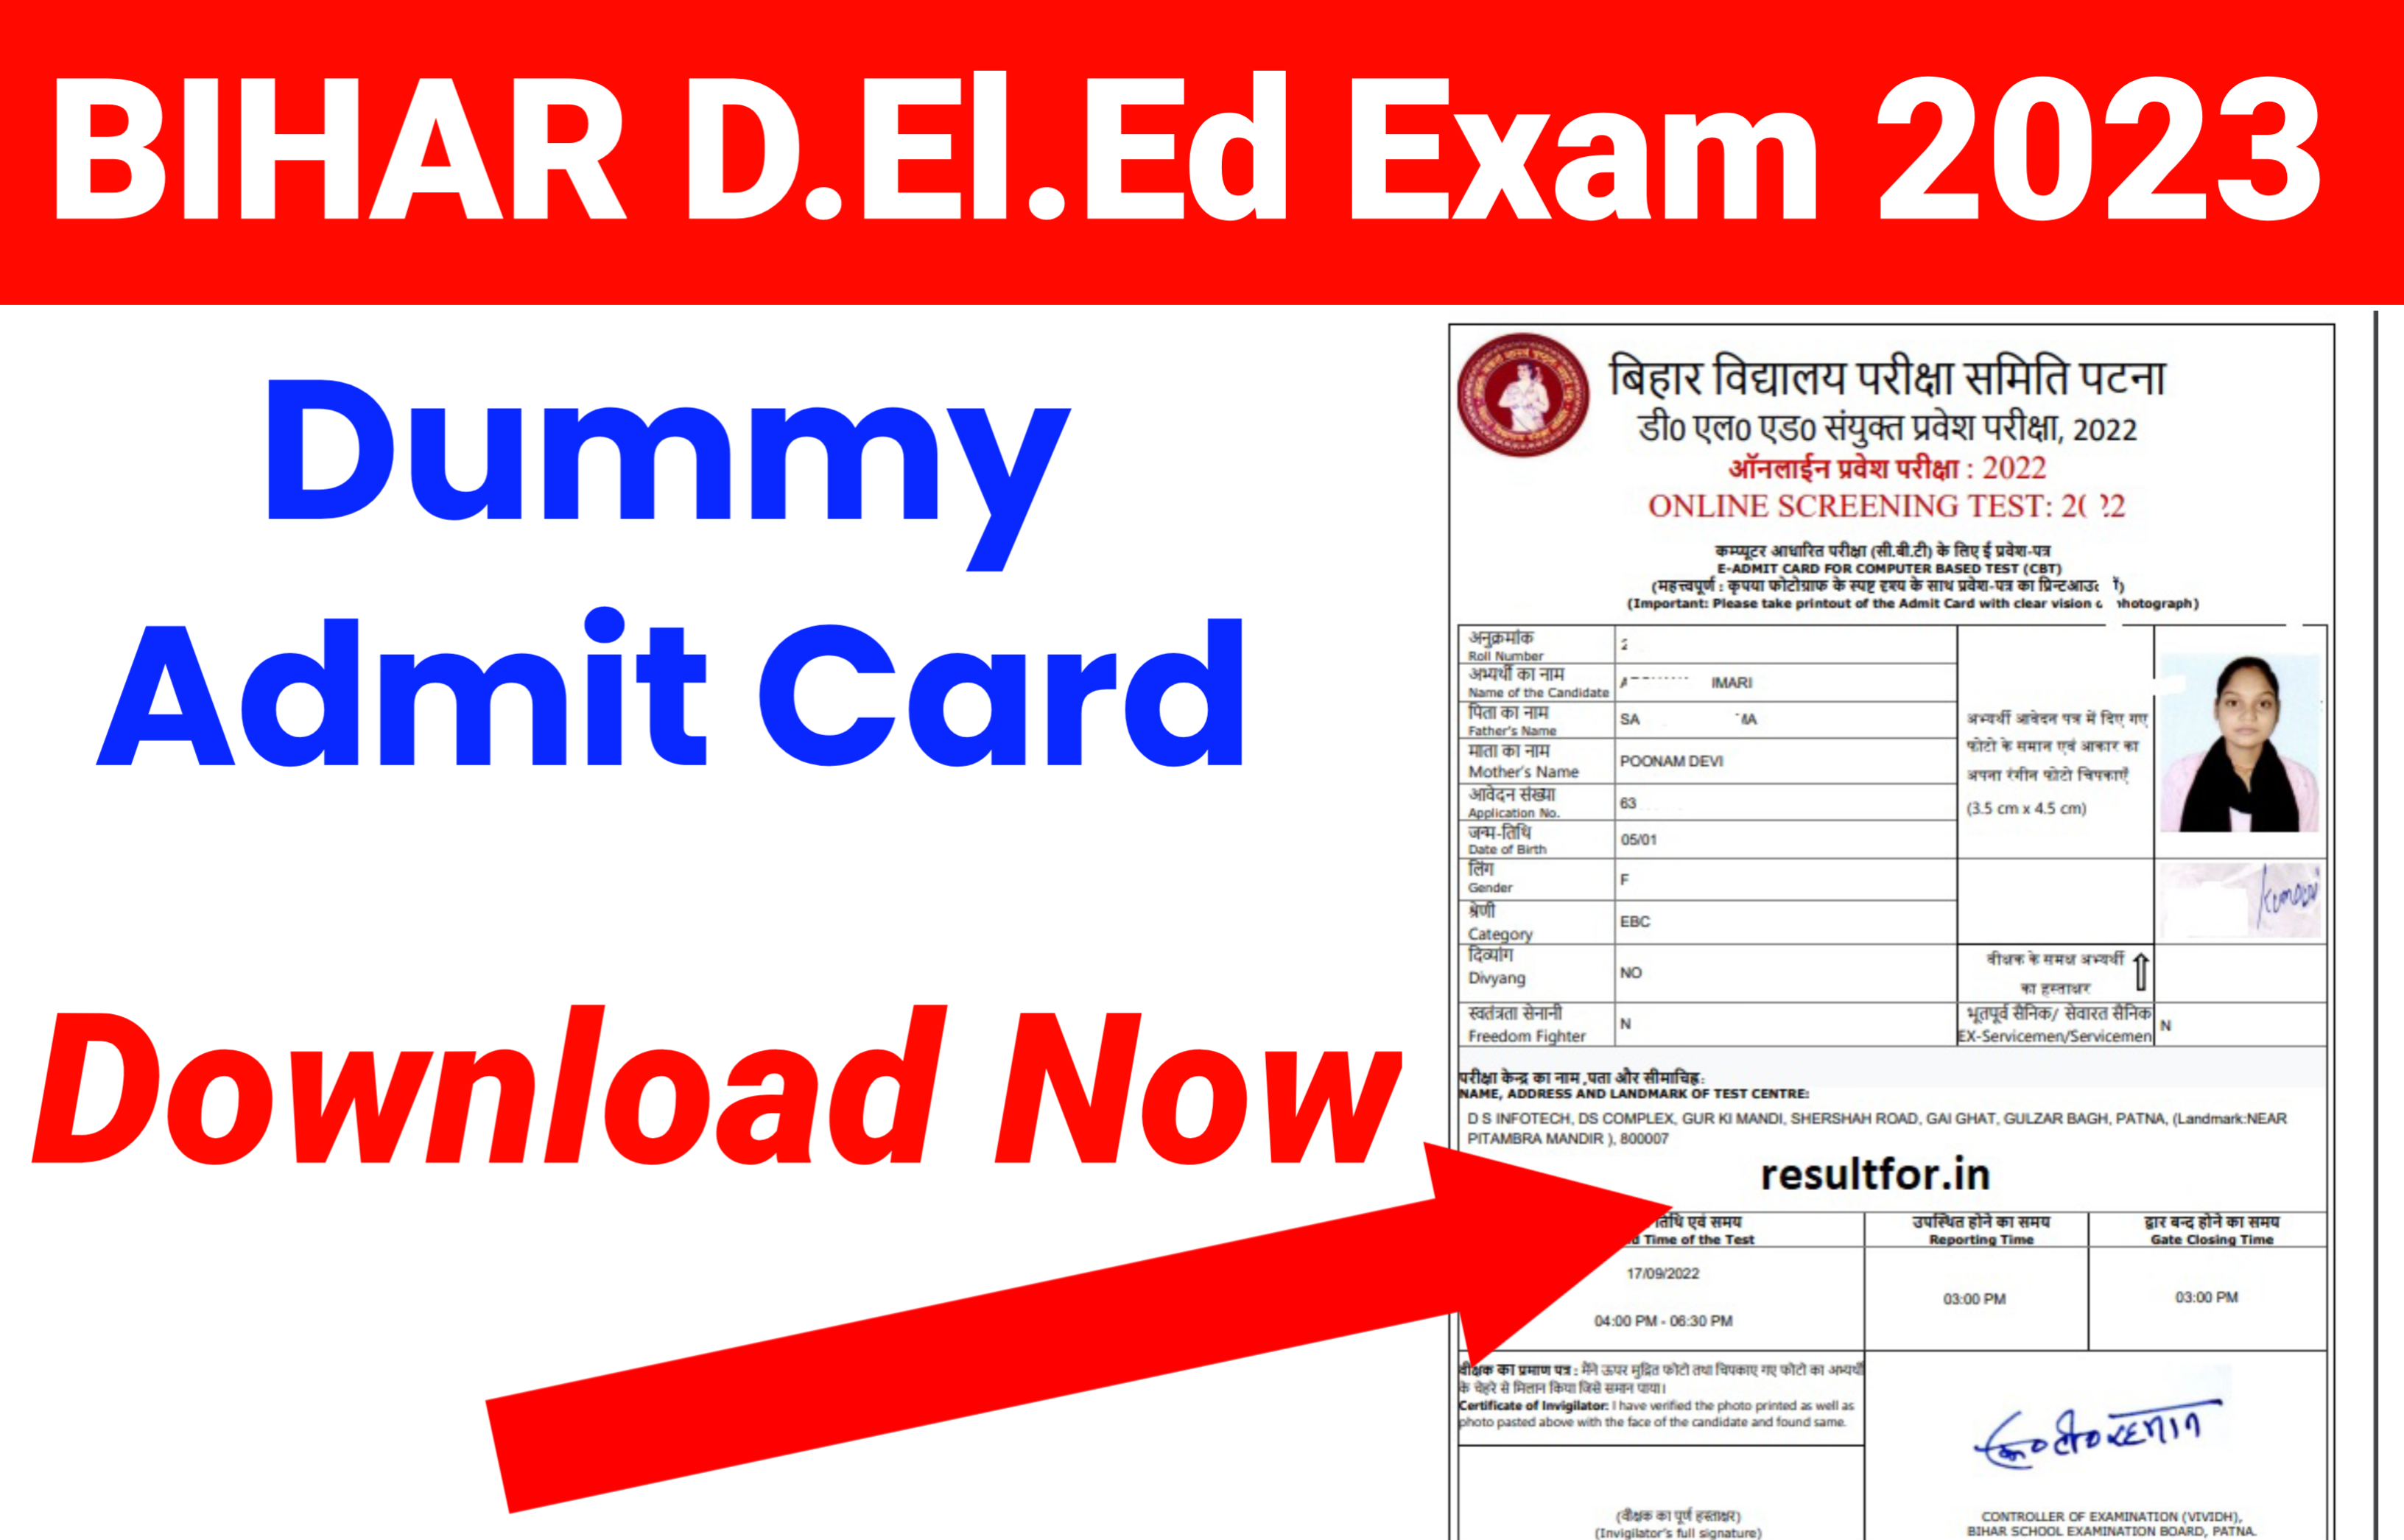 bihar deled exam 2023, bihar deled admit card